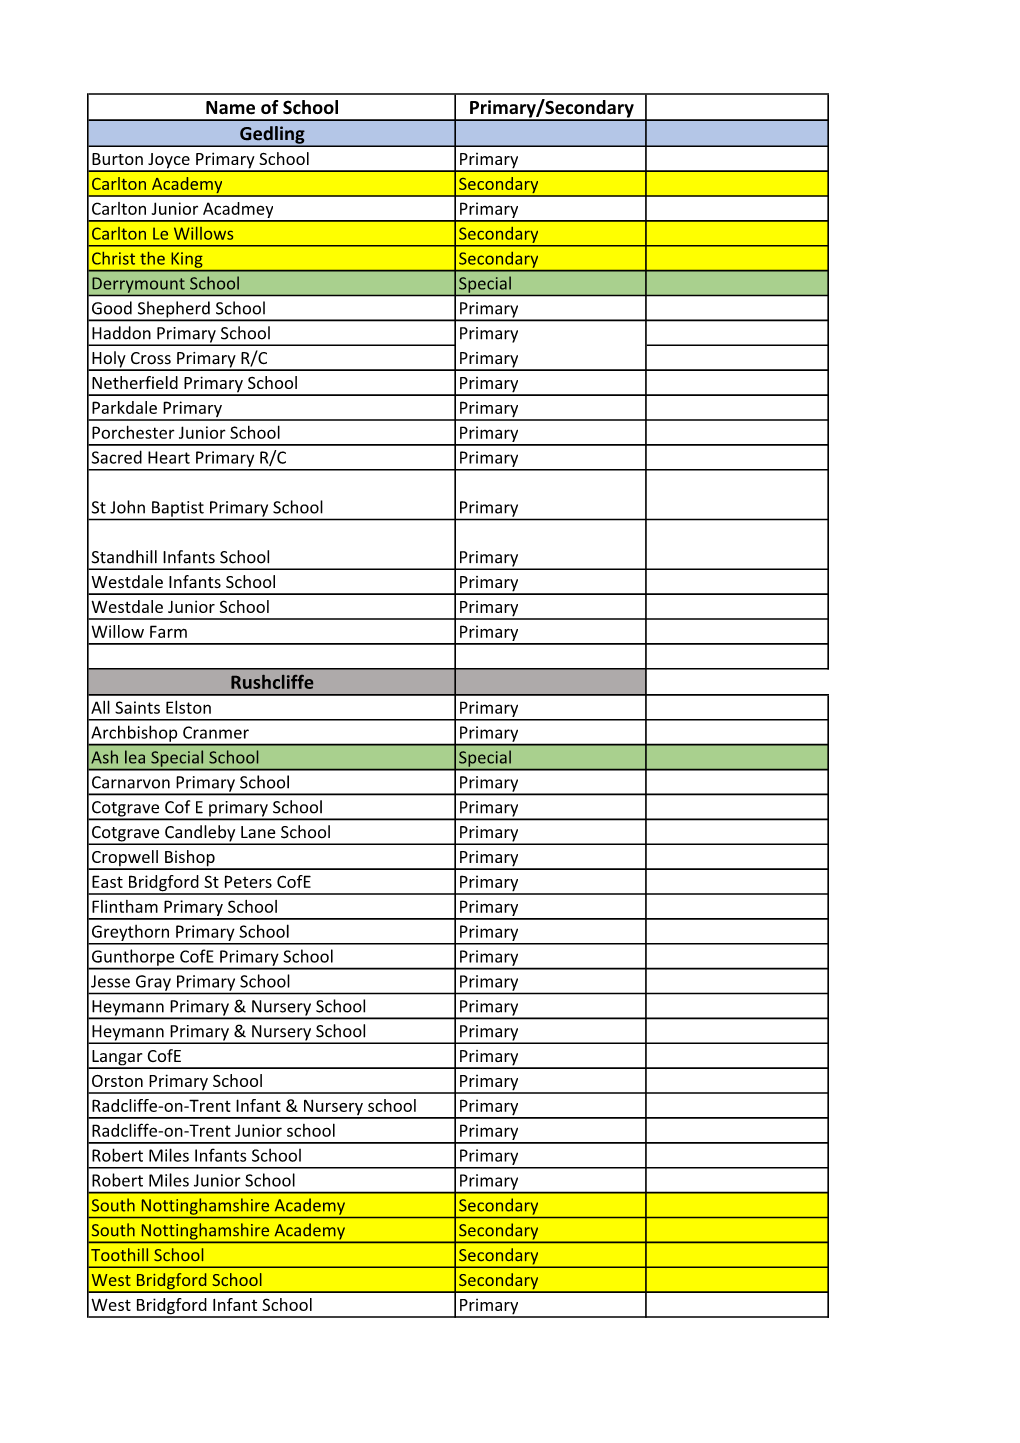 MHST List of Schools.Xlsx